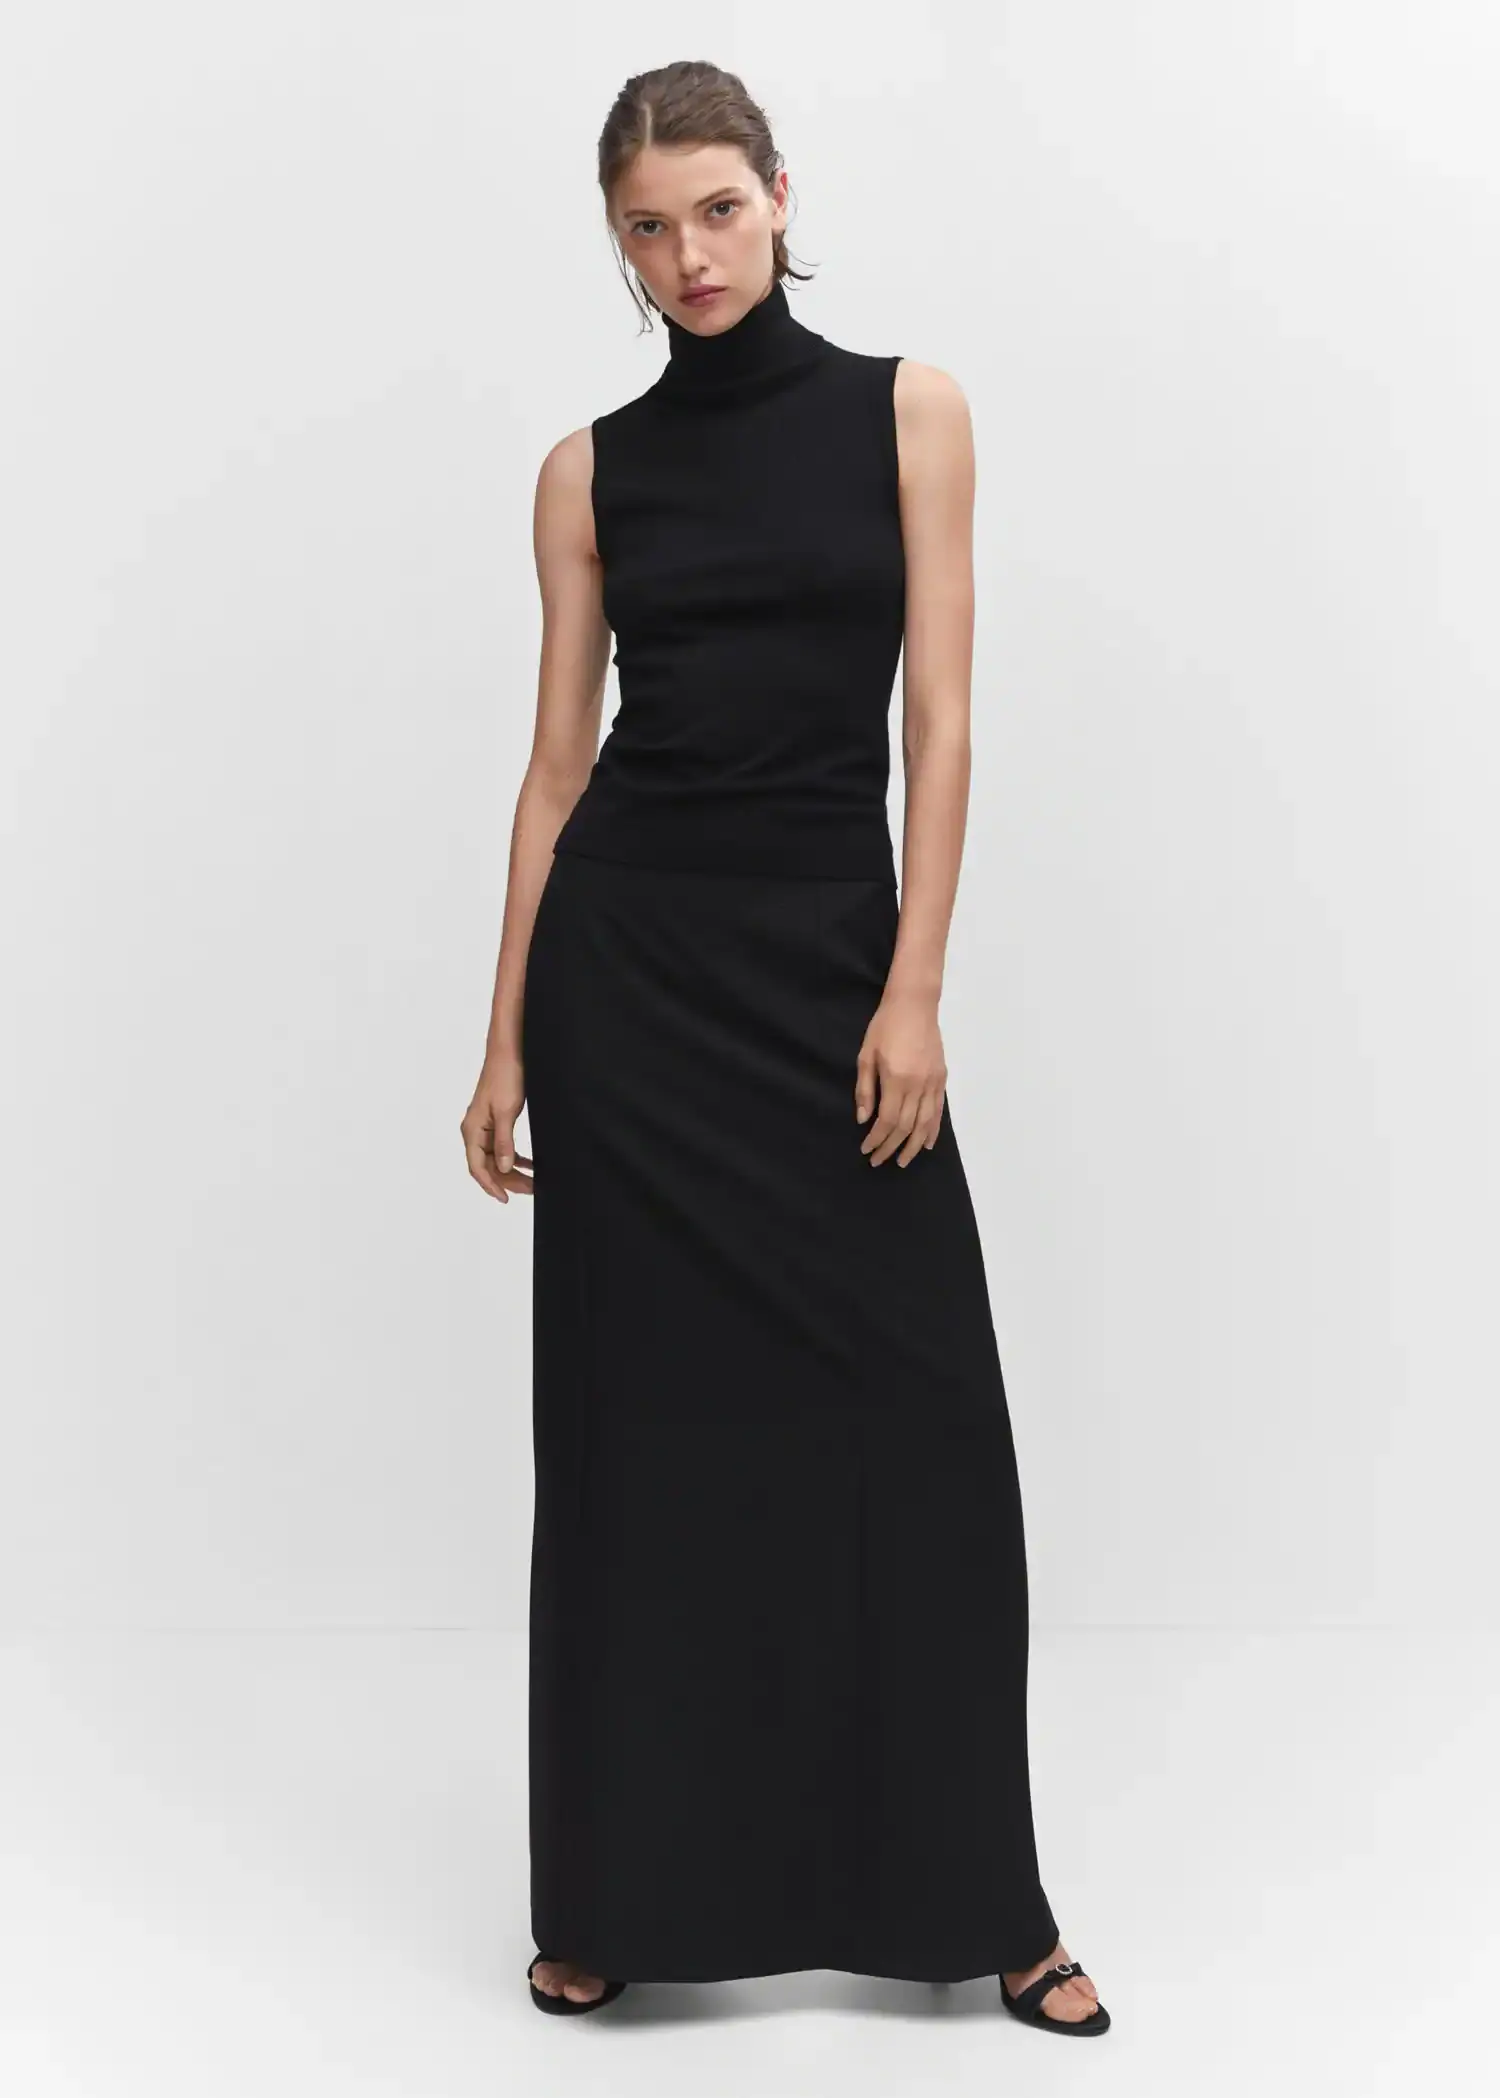 Mango Flowy long skirt. a woman wearing a black dress standing in a room. 